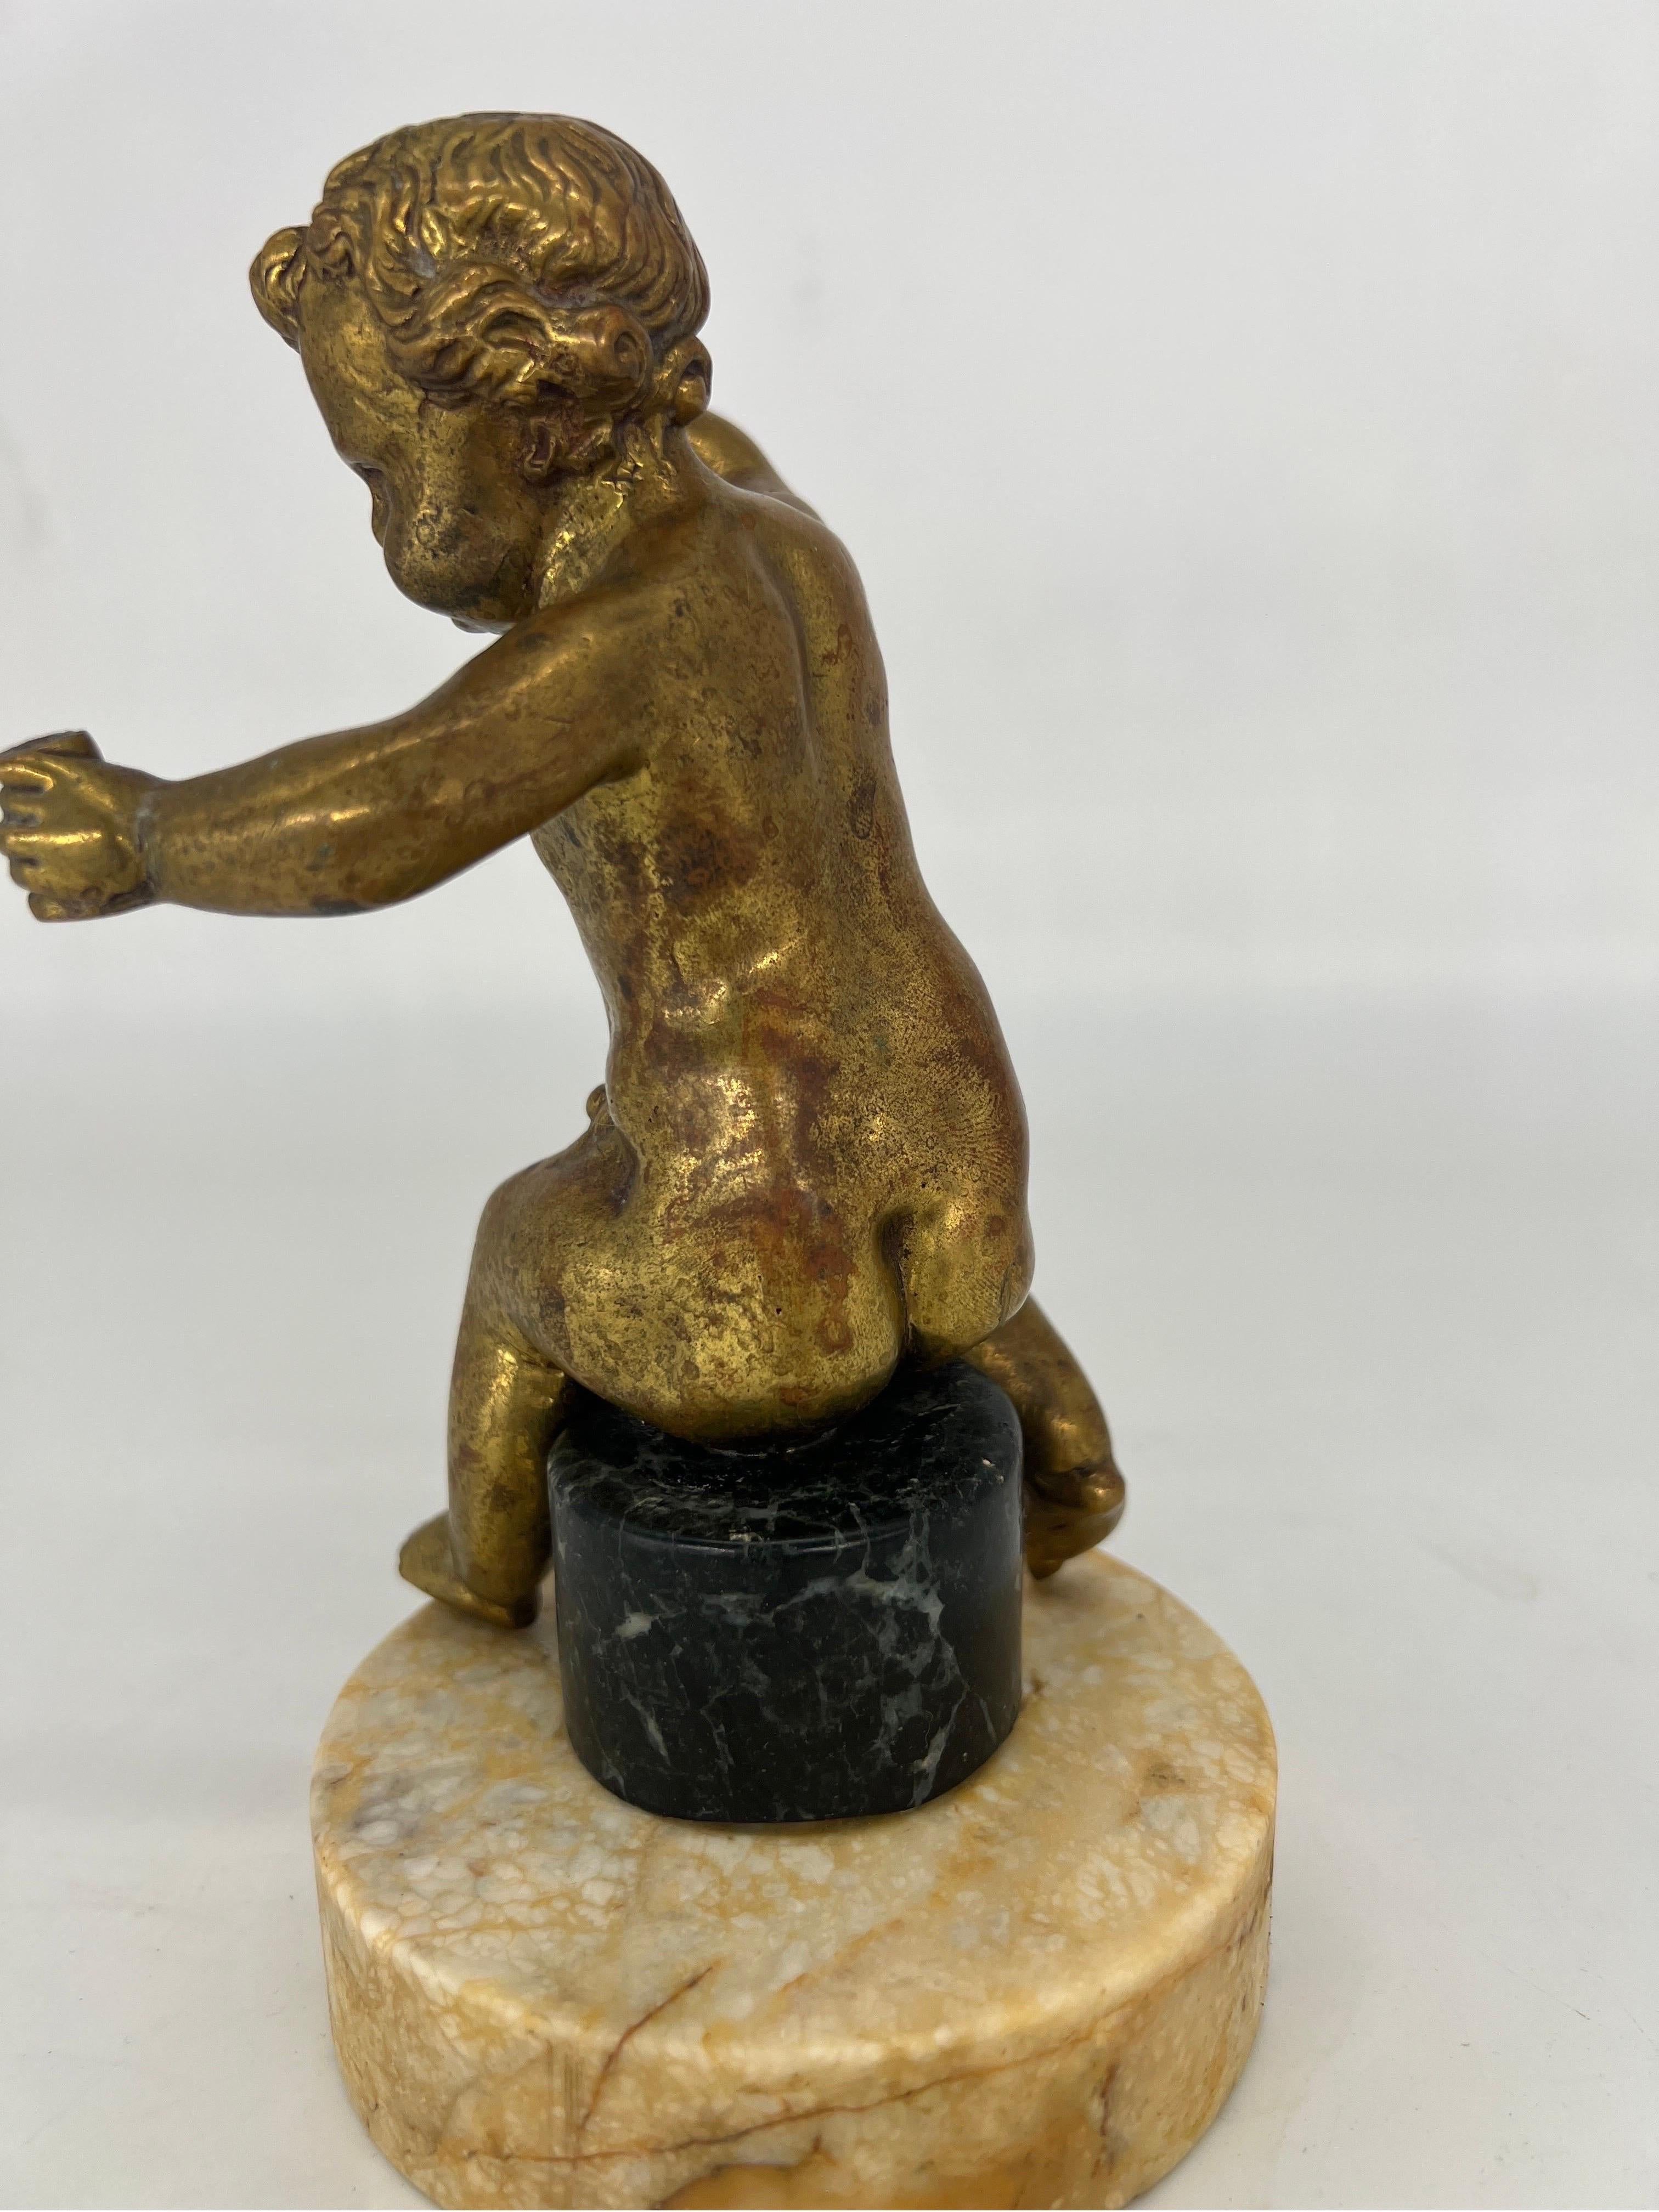 Antique French Gilt Bronze “Grapes into Wine” Cherub Statue Falconet Style For Sale 1